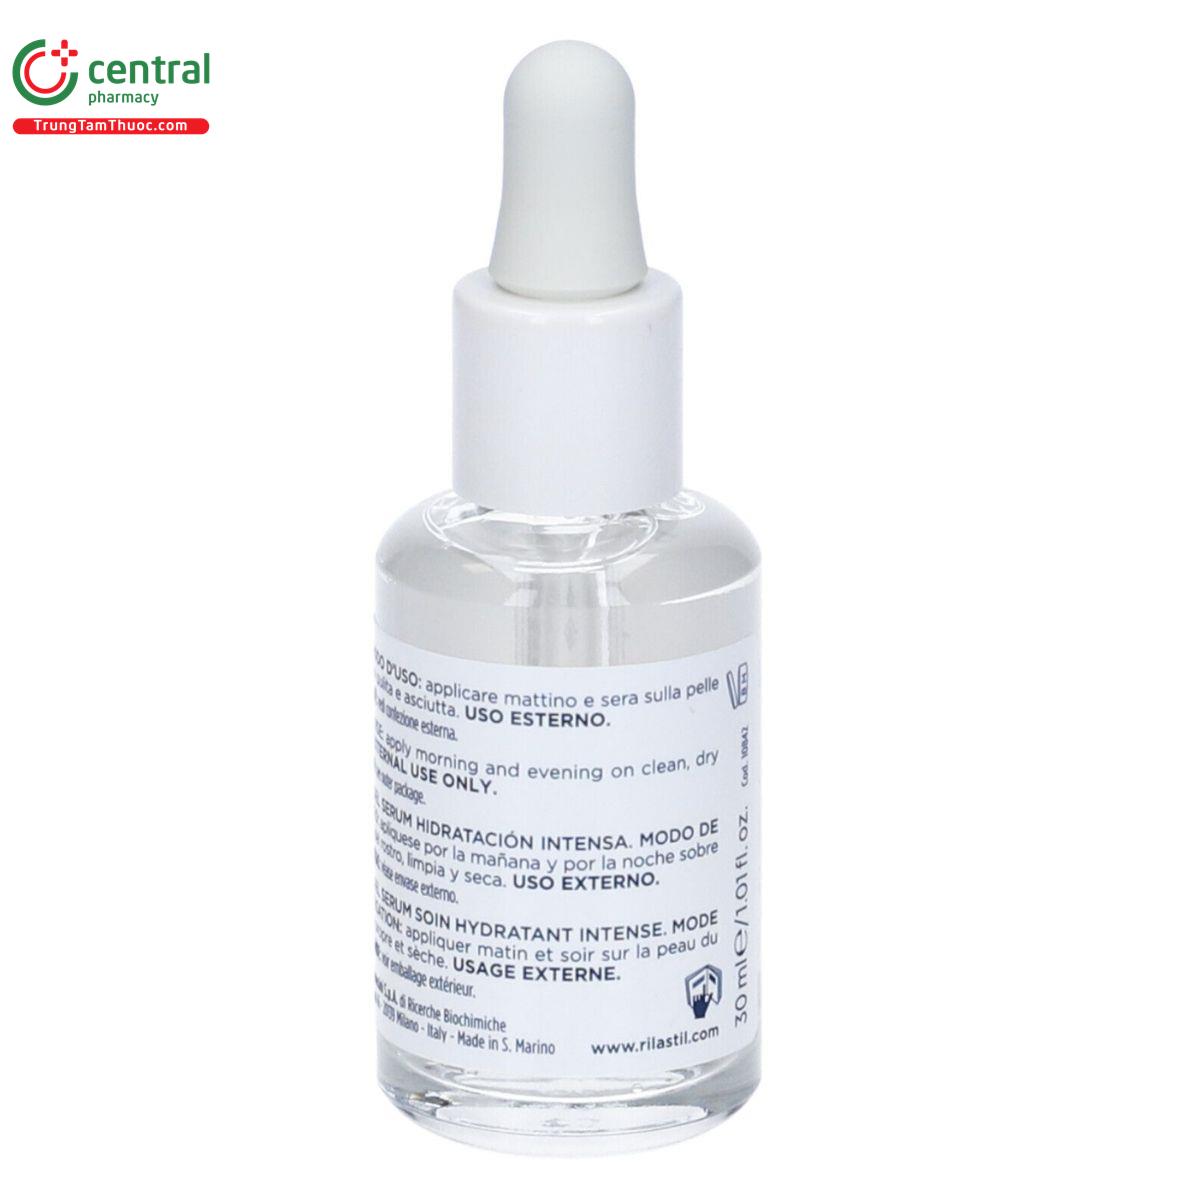 rilastil aqua intense gel serum soin hydratant intense 4 C0076